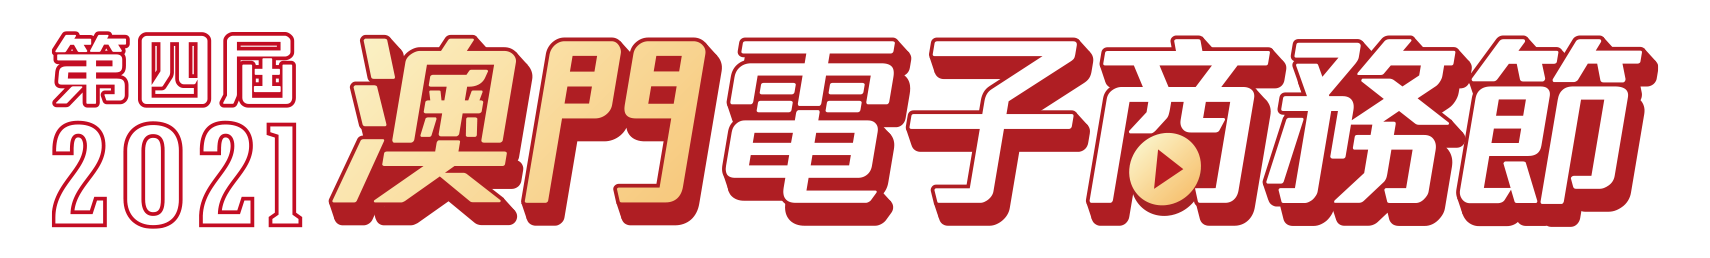 2021電商節Logo.png